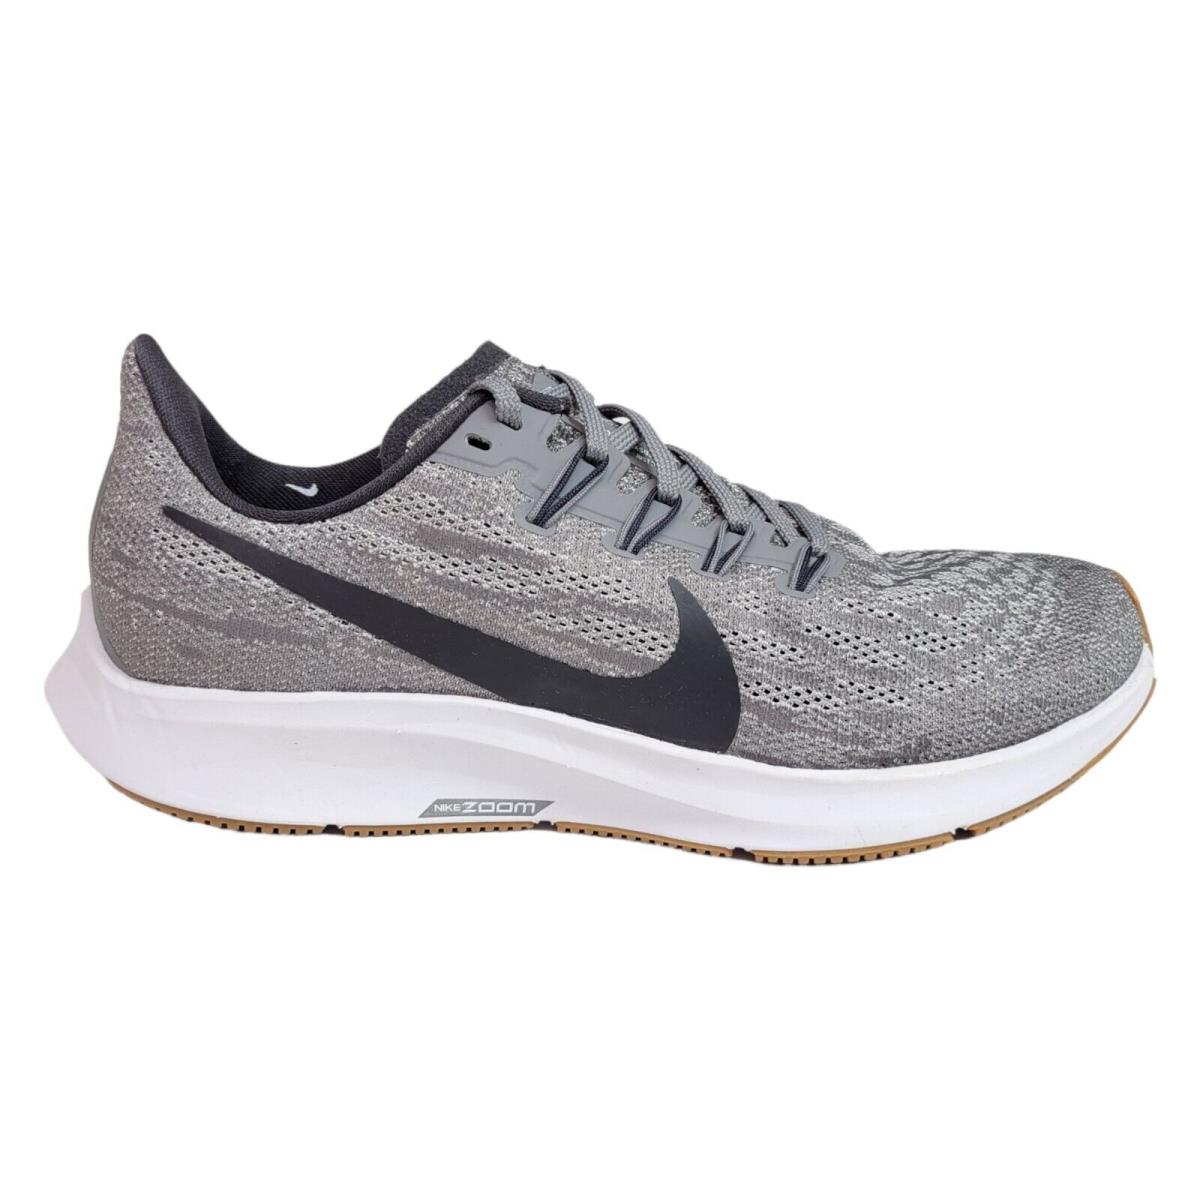 Nike Men 9 9.5 Air Zoom Pegasus 36 Running Shoe Sneaker Gunsmoke Gray AQ2203-001 - Gray